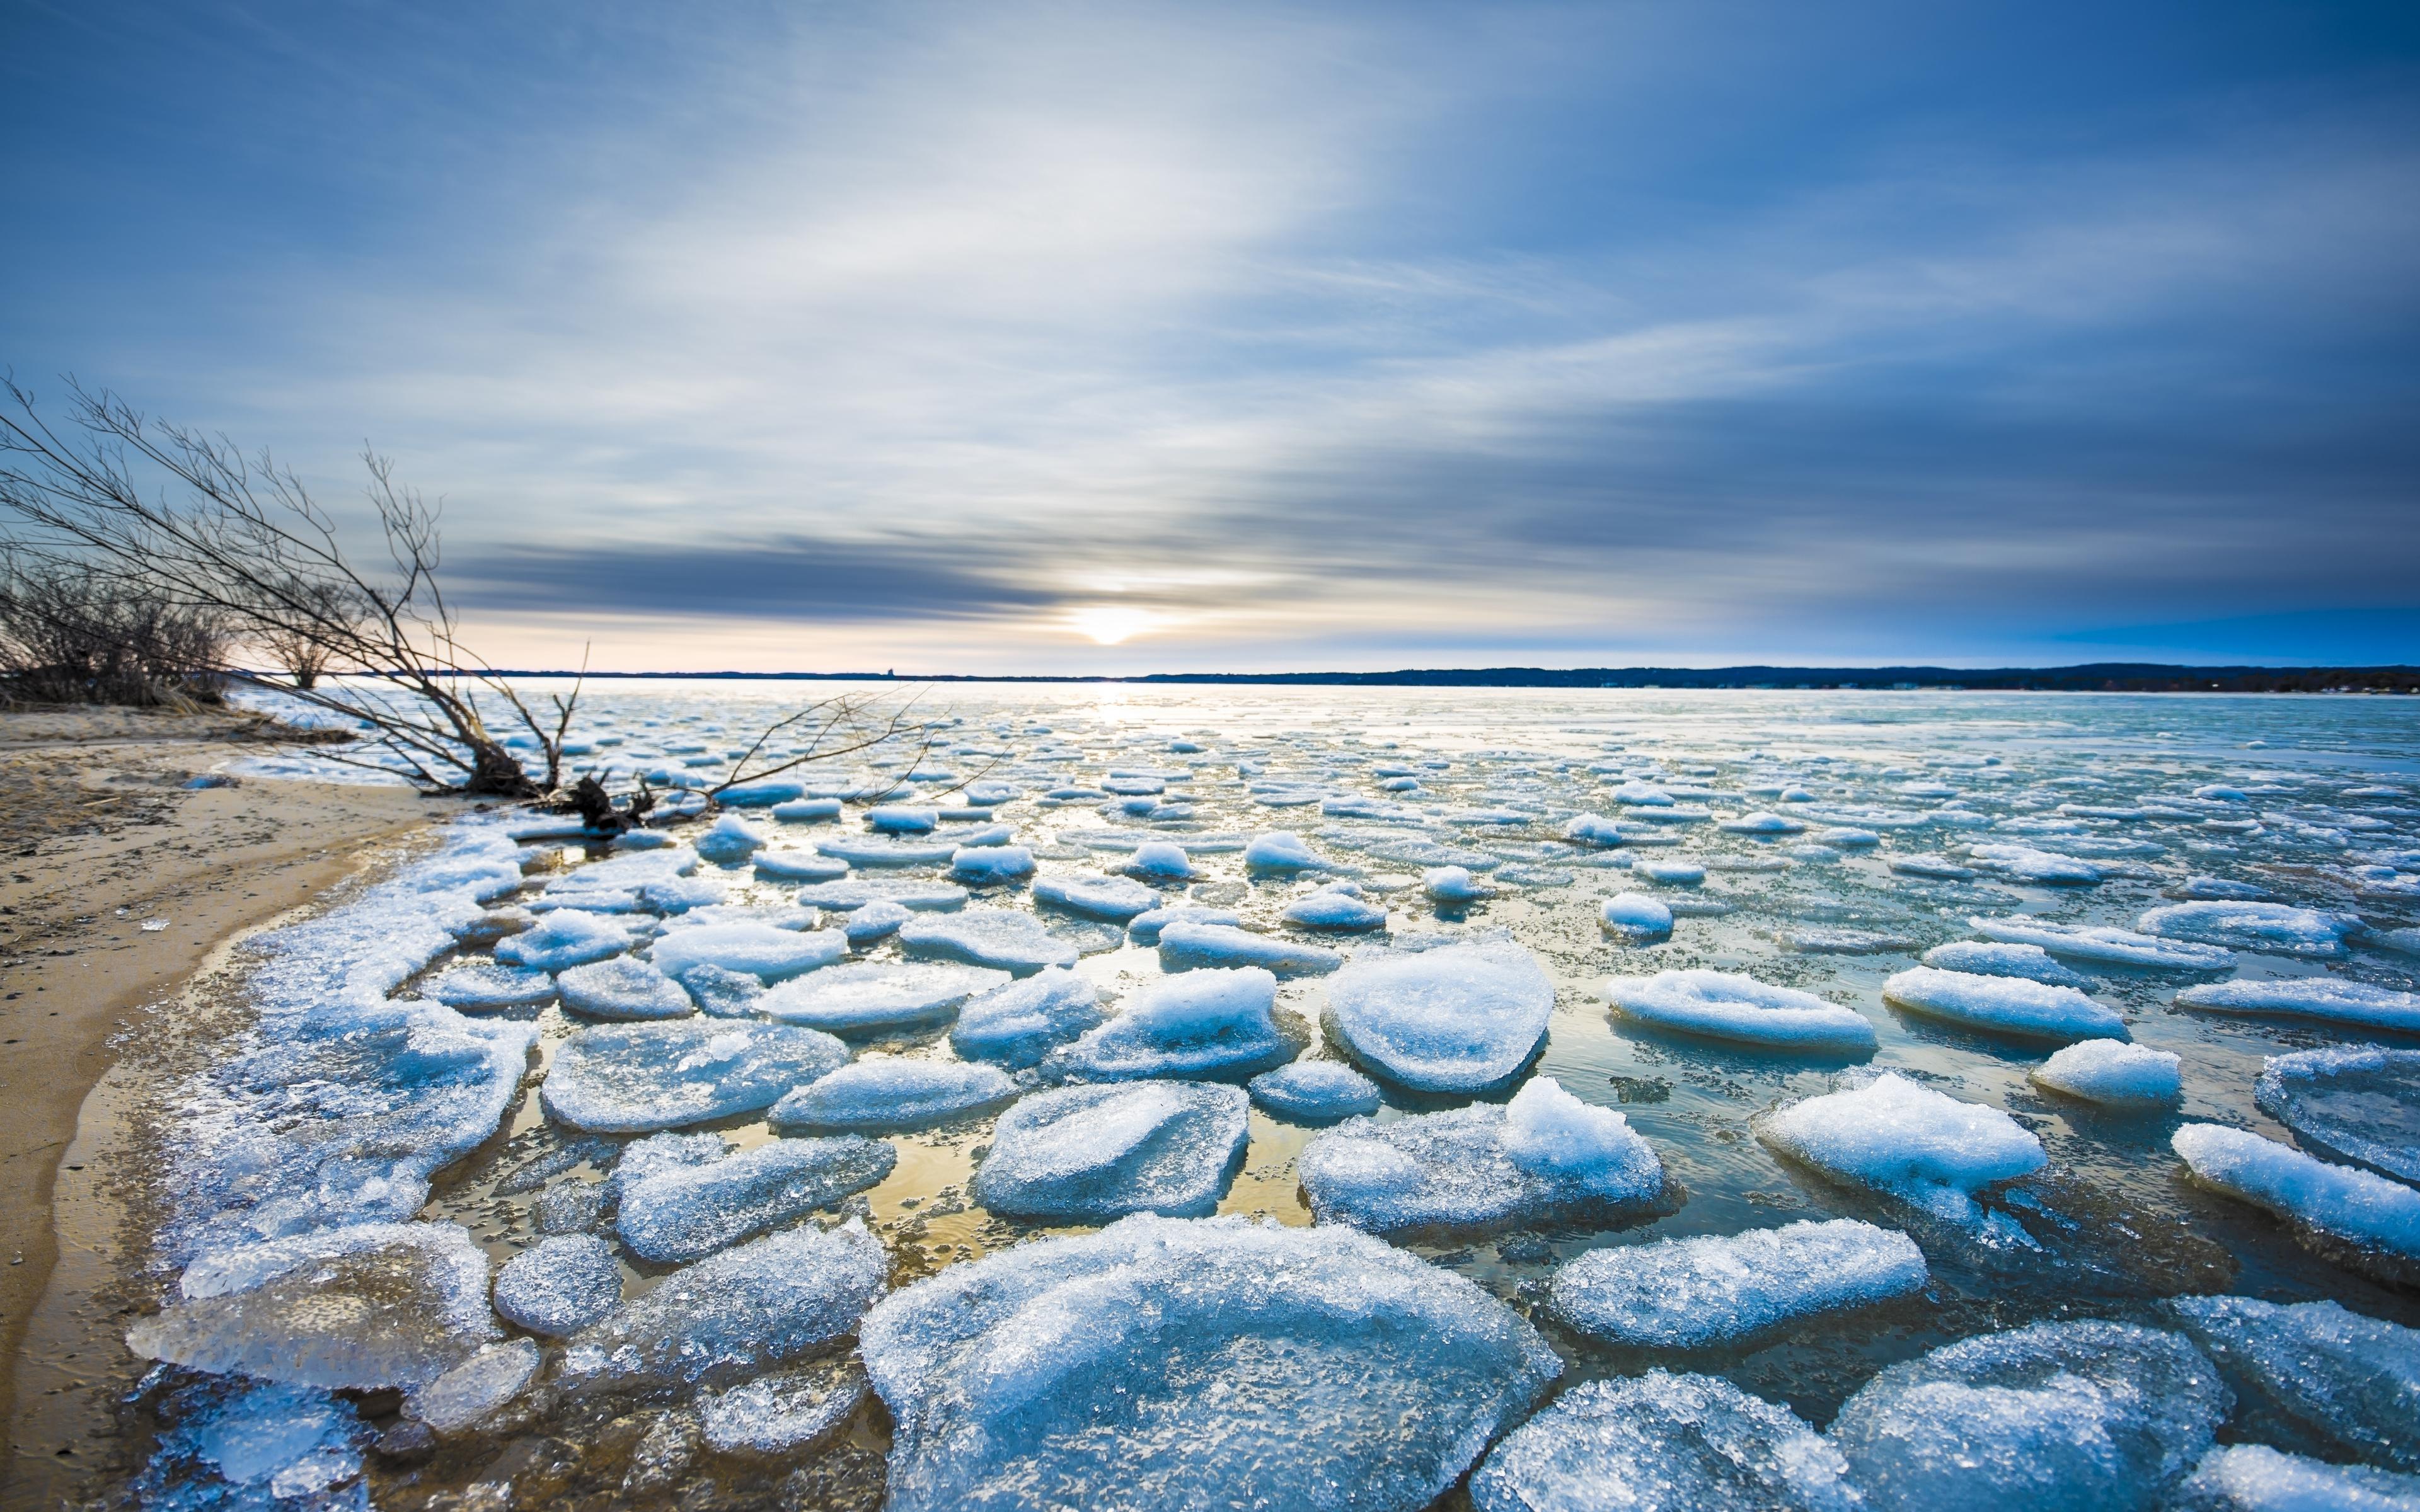 Download 3840x2400 wallpaper winter, small icebergs, frozen lake